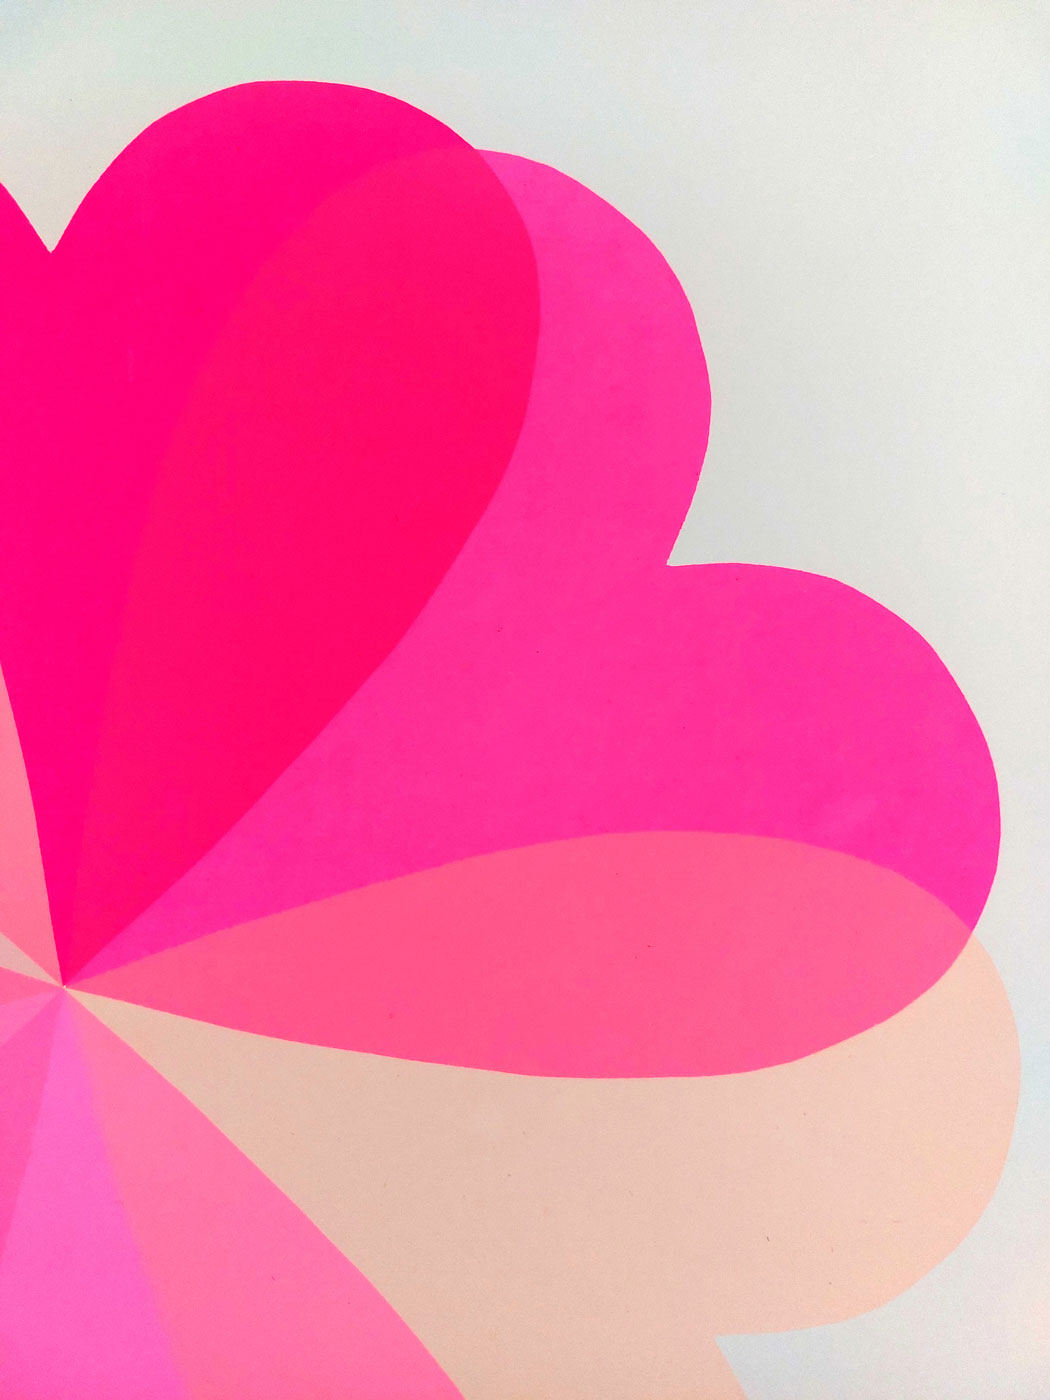 Large Hearts & Flowers Neon Pink - Framed Enlarged